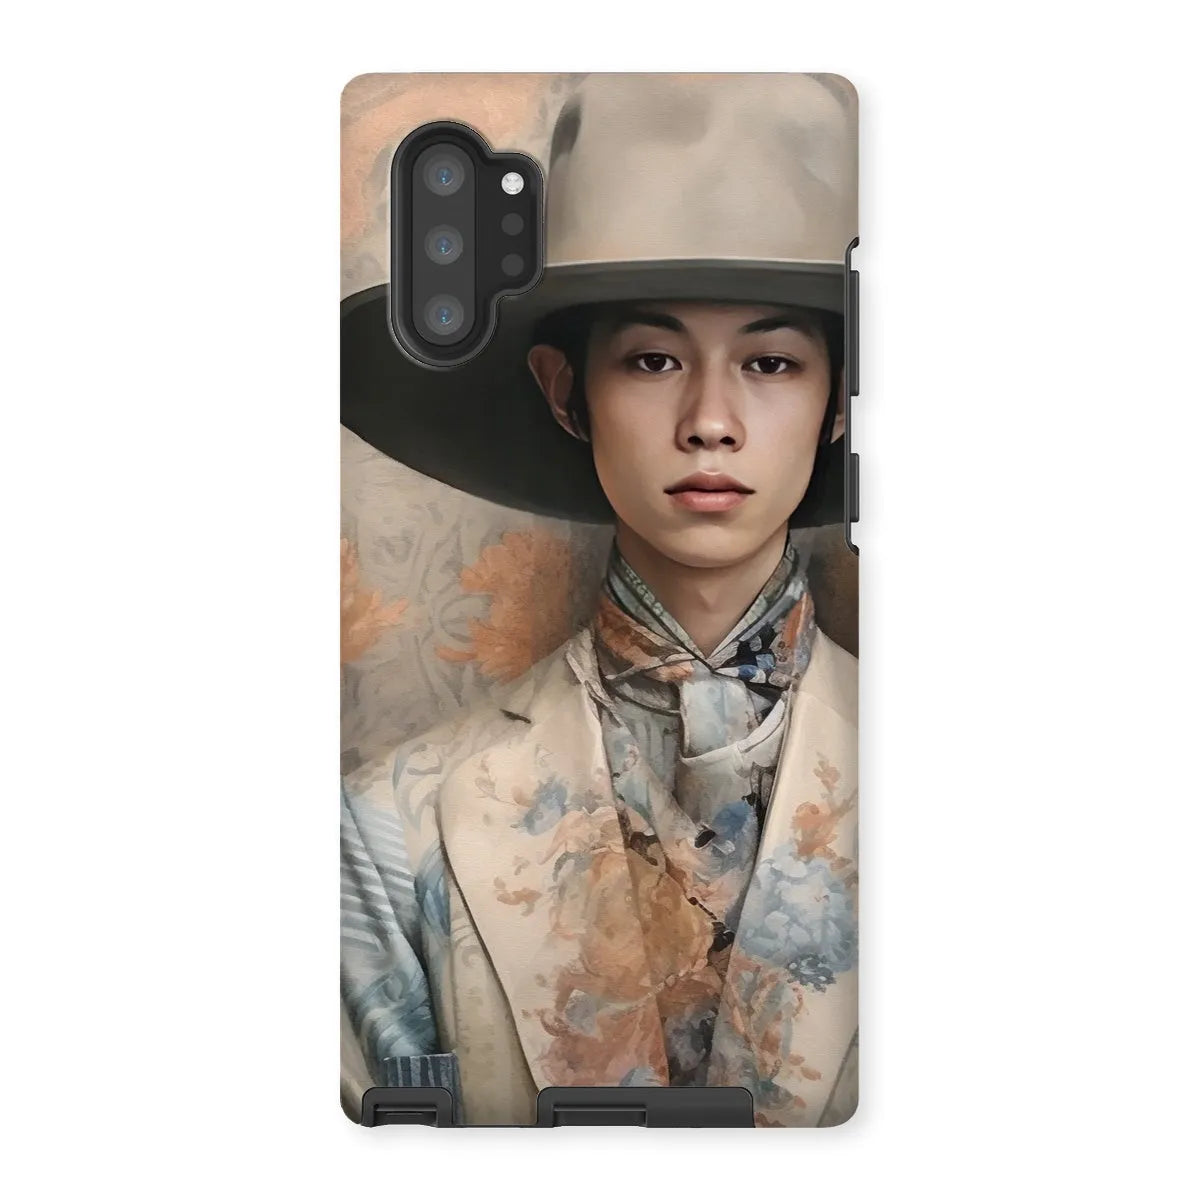 Thuanthong The Transgender Cowboy - Thai F2m Art Phone Case - Samsung Galaxy Note 10p / Matte - Mobile Phone Cases